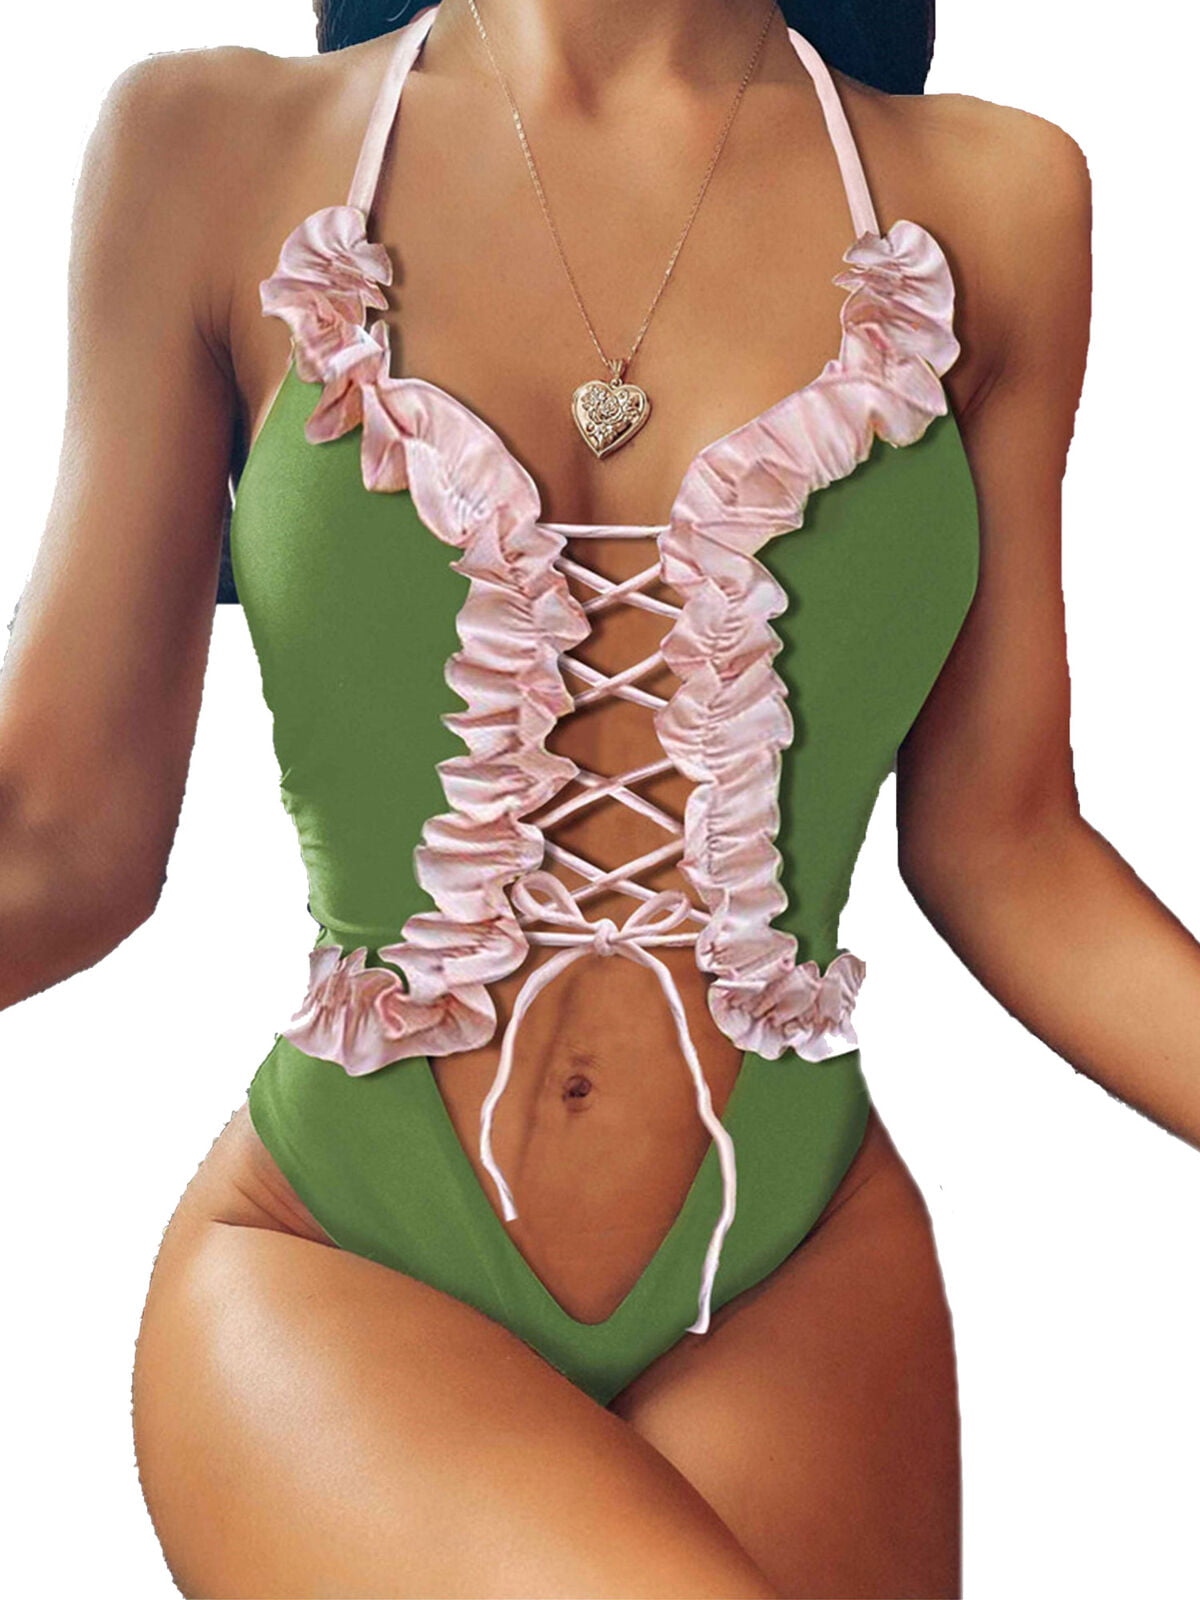 Women's One Piece Swimsuit Swimwear Bandage Monokini Push Up Bikini Beachwear 